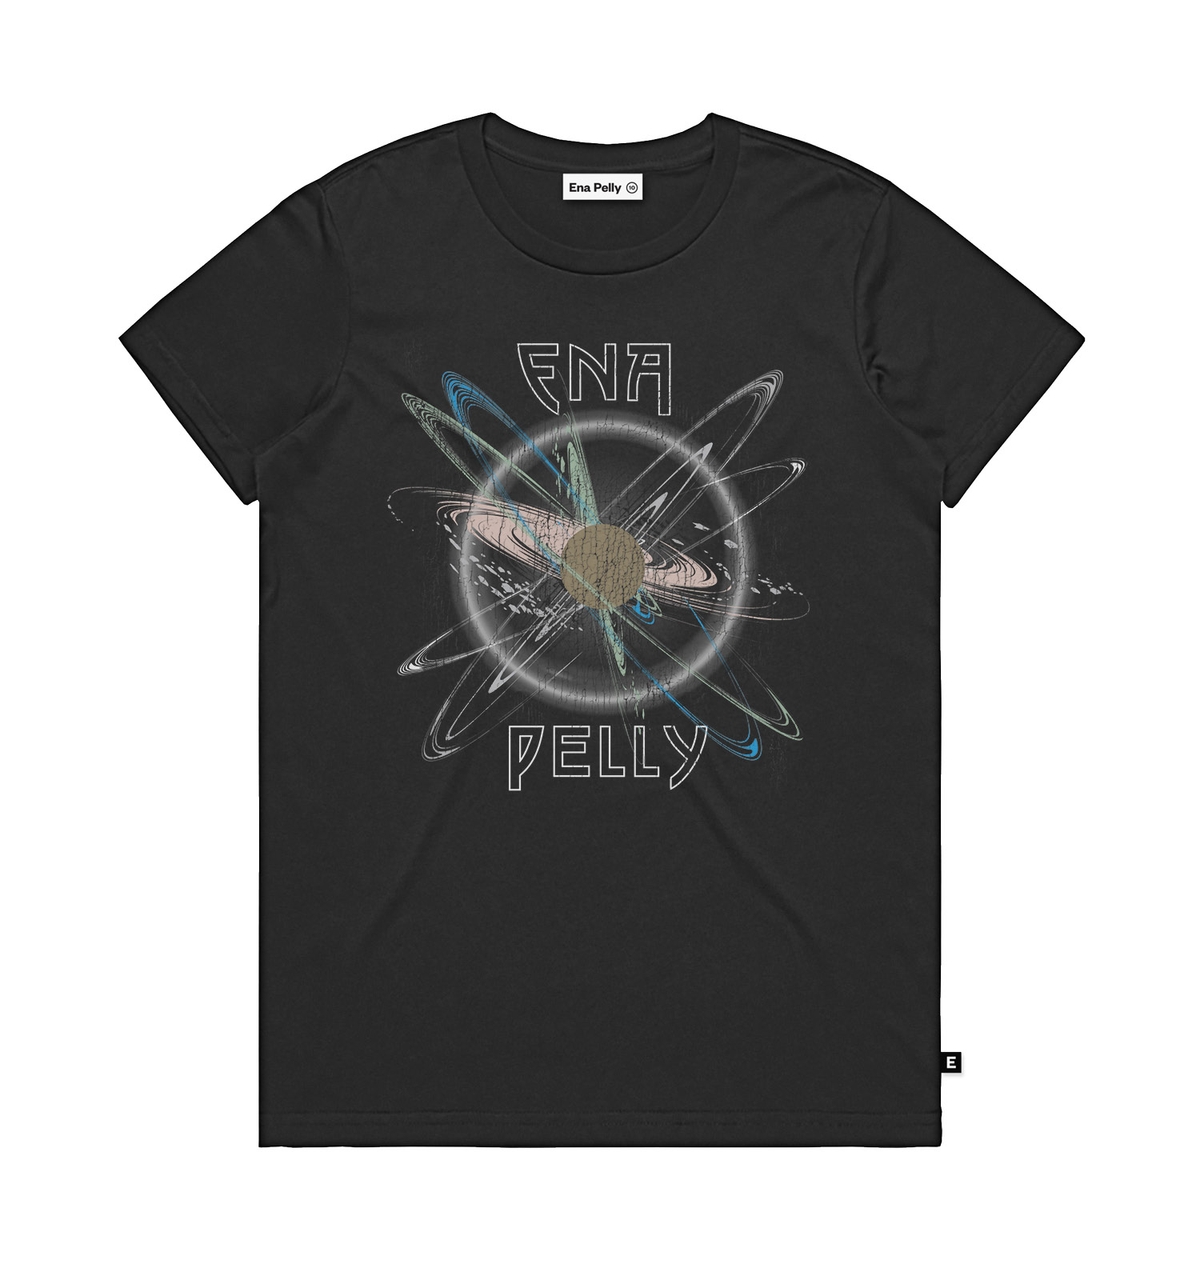 Ena Pelly - Space T-Shirt Graphic | Atollon - a design company